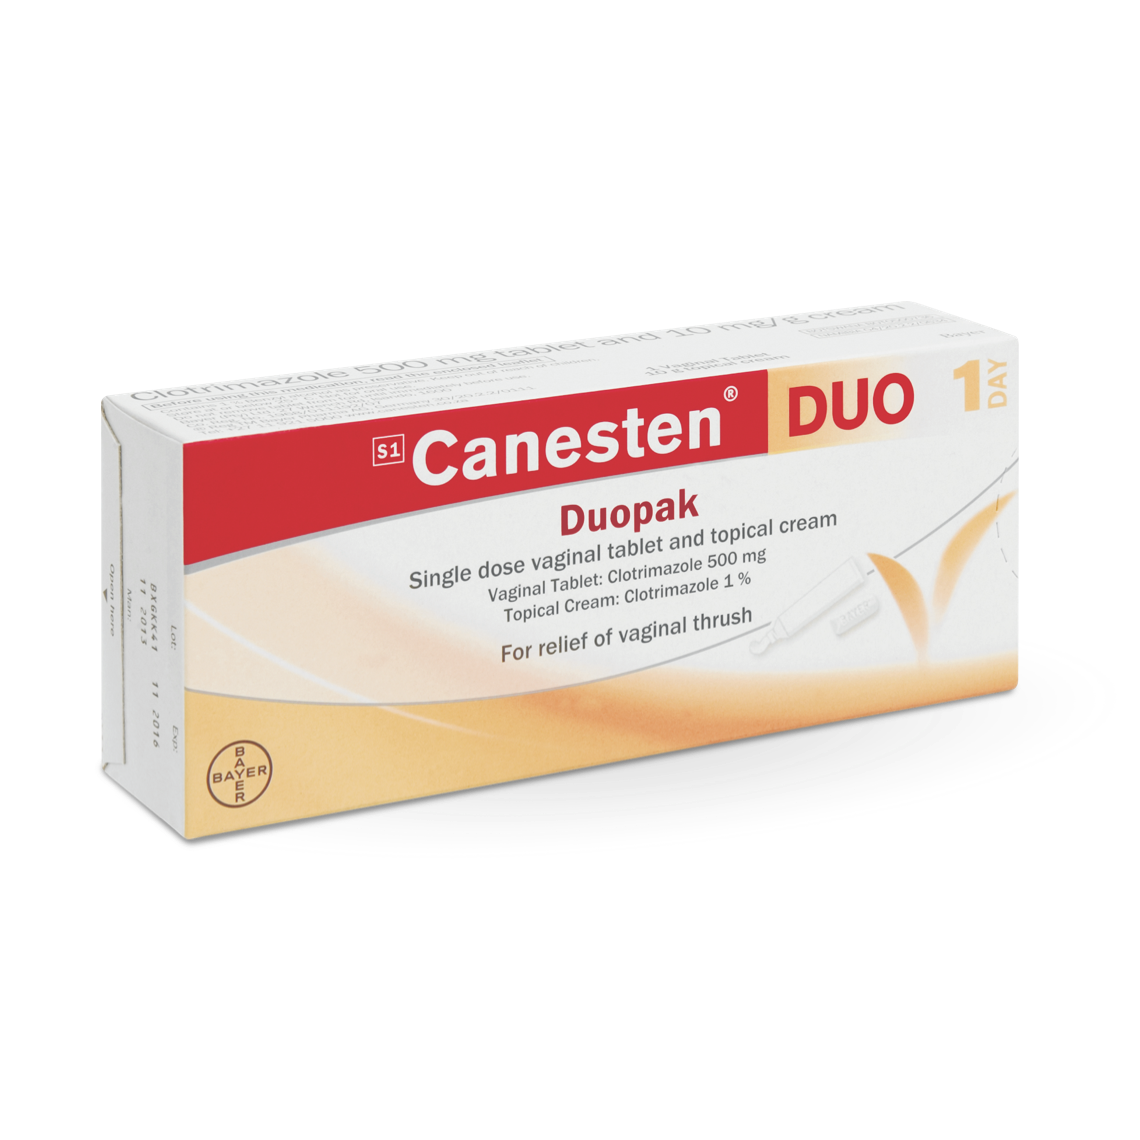 Canesten Thrush single dose vaginal tablet and topical cream, duopak 